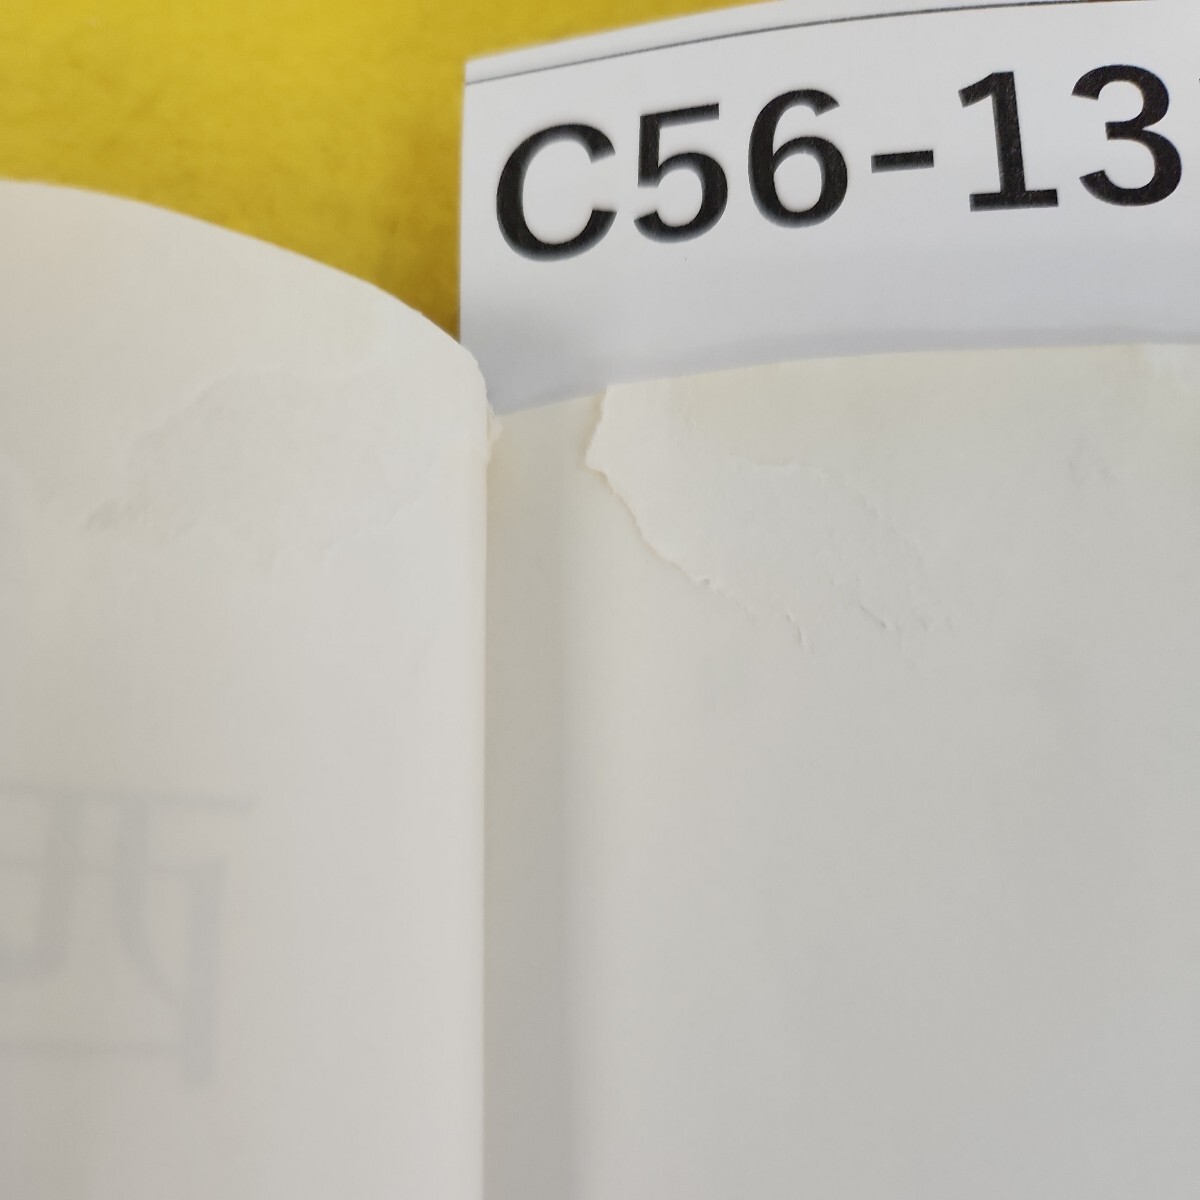 C56-131 西洋建築史図集 三訂版 日本建築学会編 彰国社刊 ページ汚れ破れ多数あり。_画像8